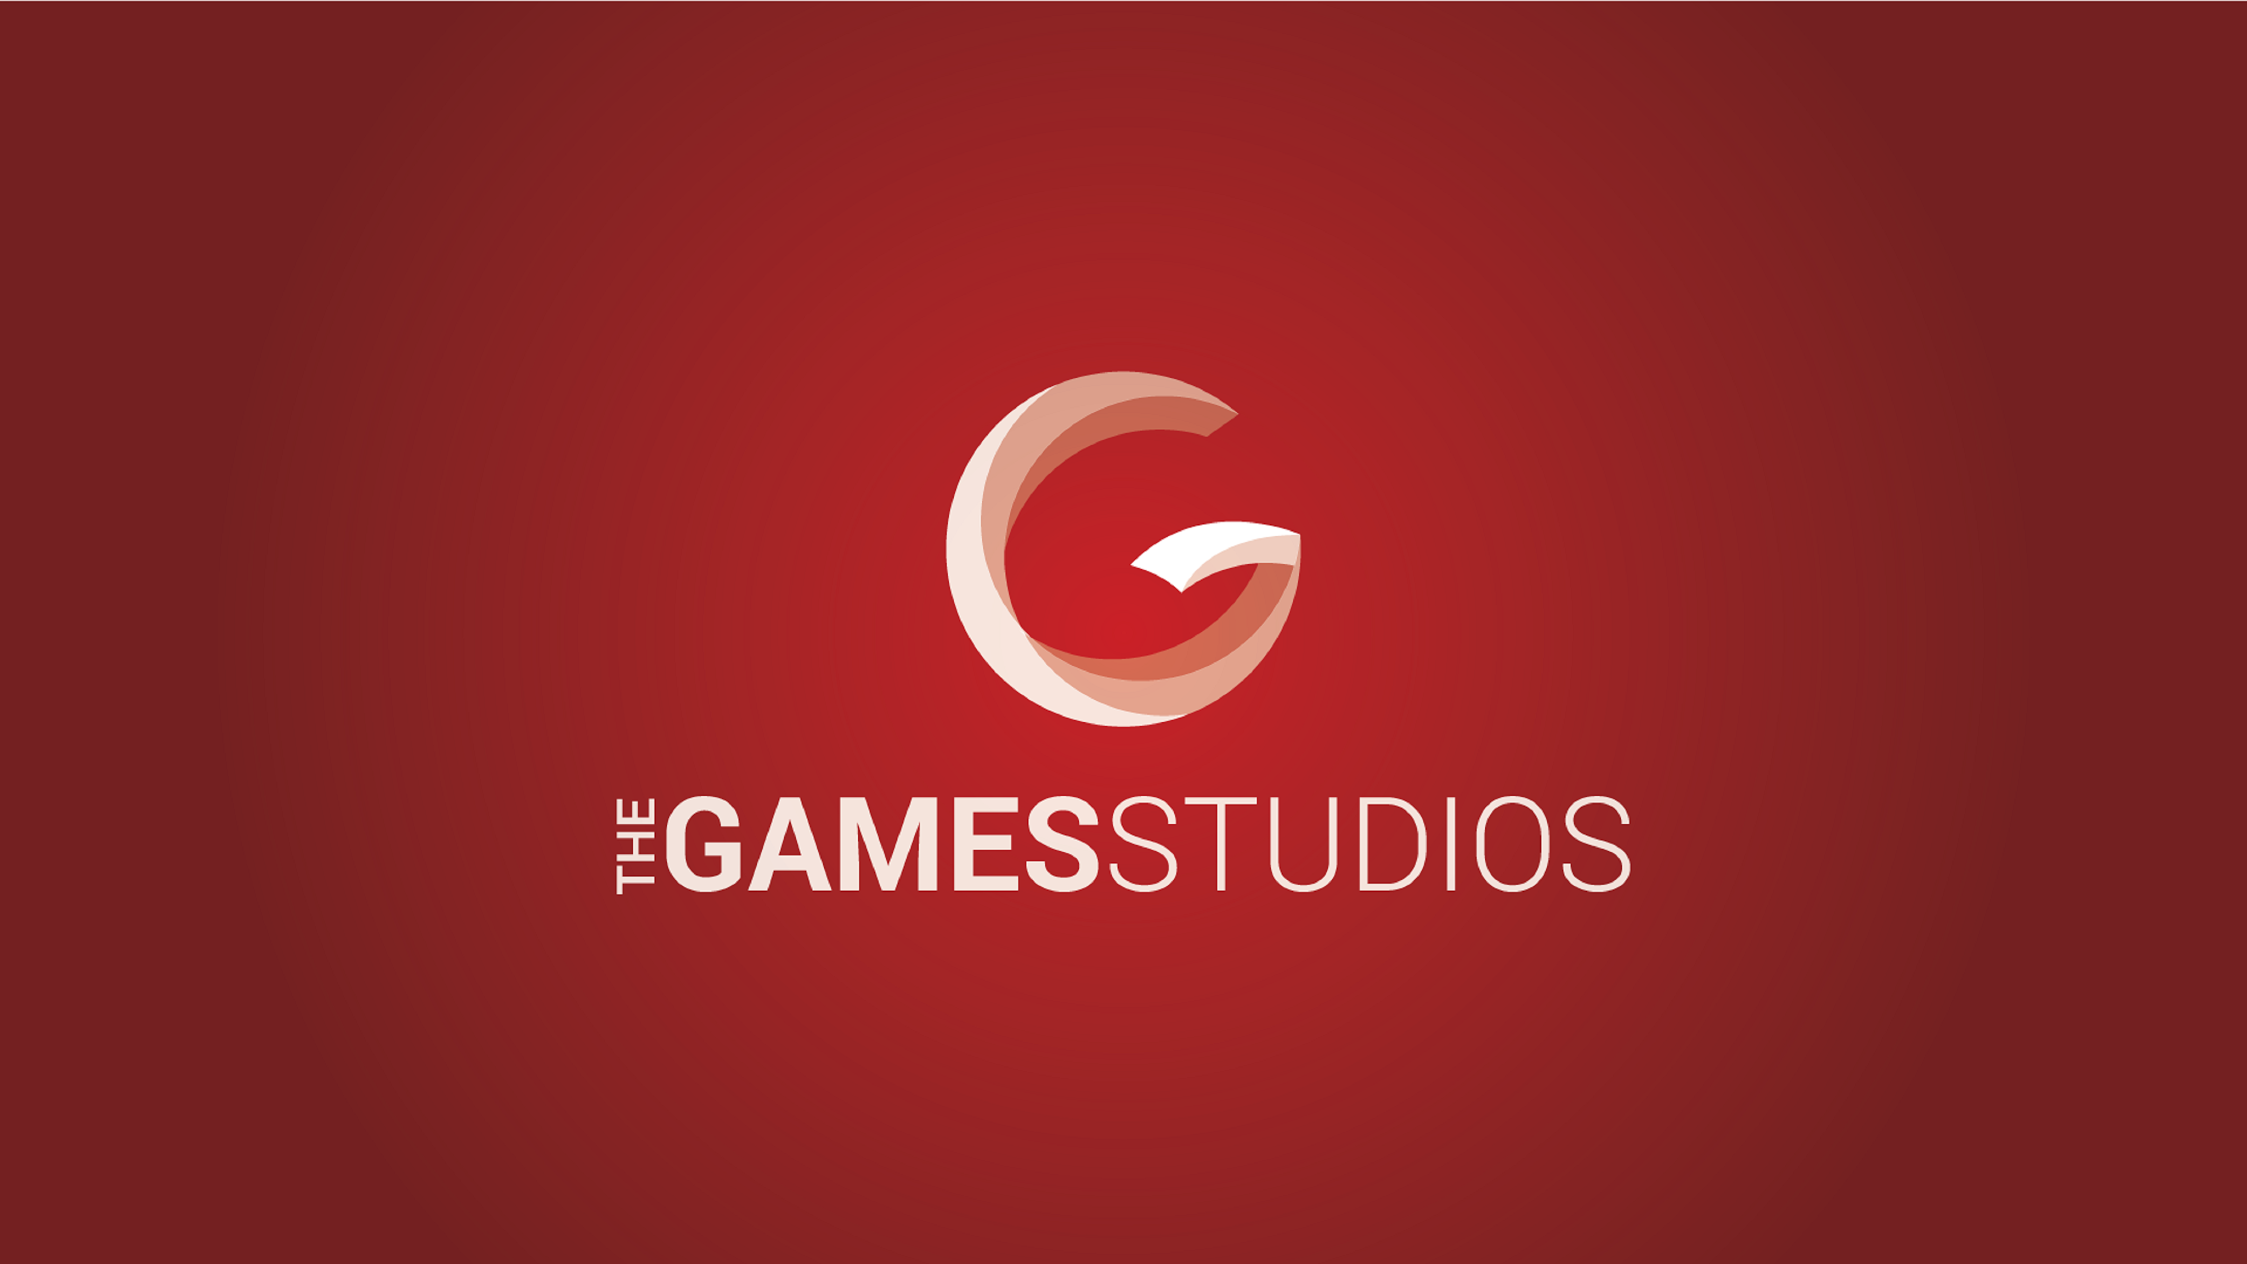 The Games Studios